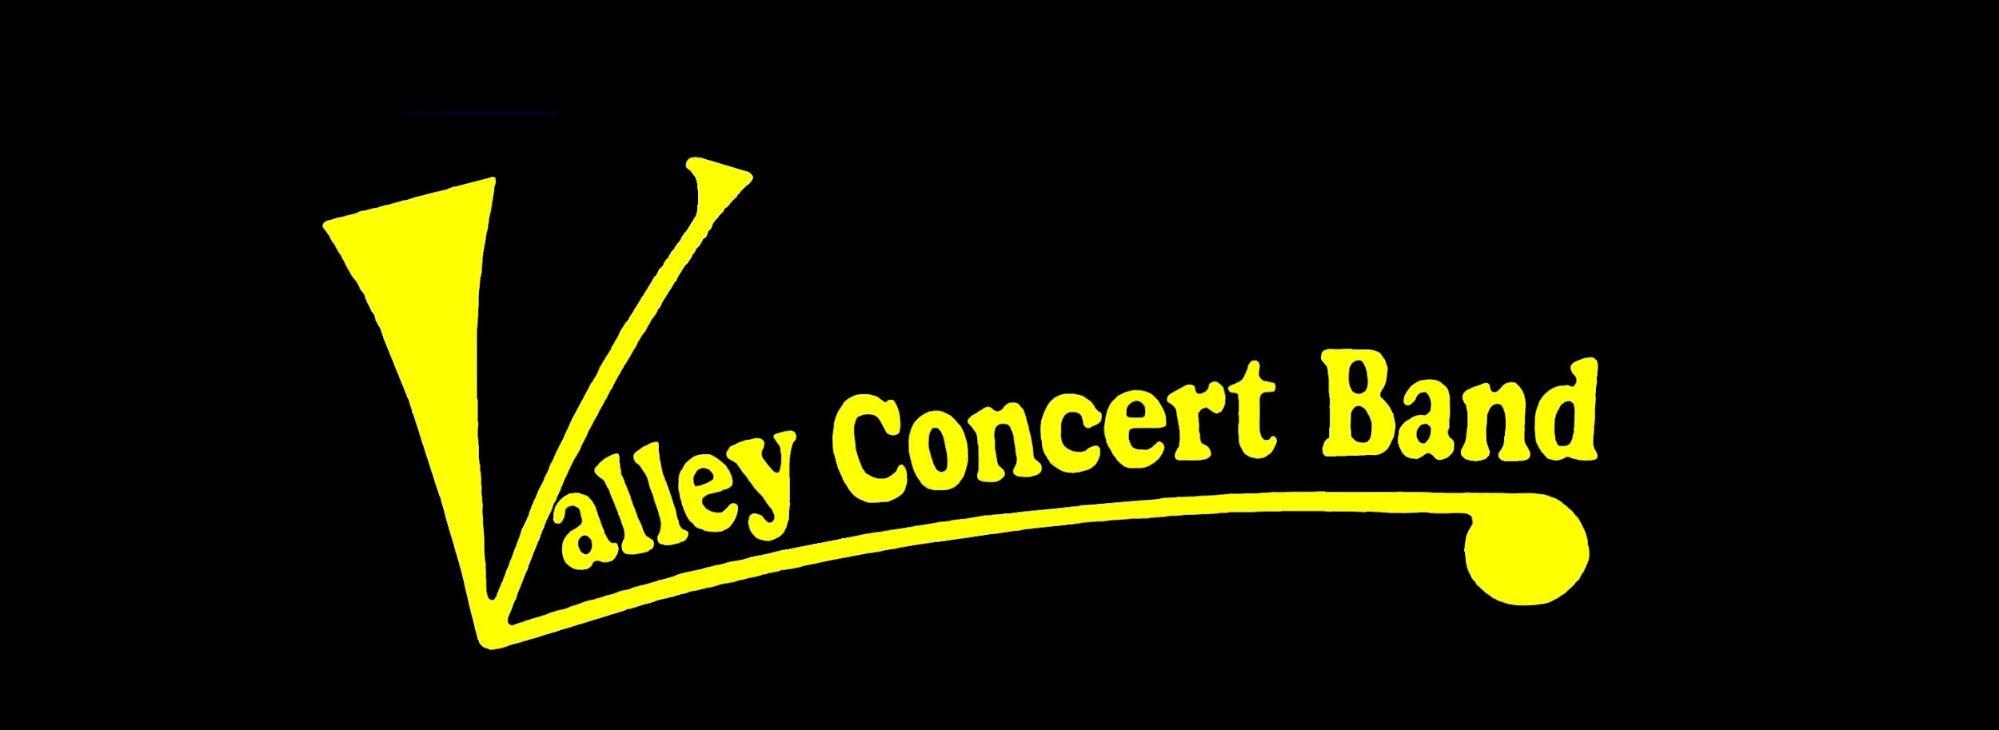 Valley Concert Band logo